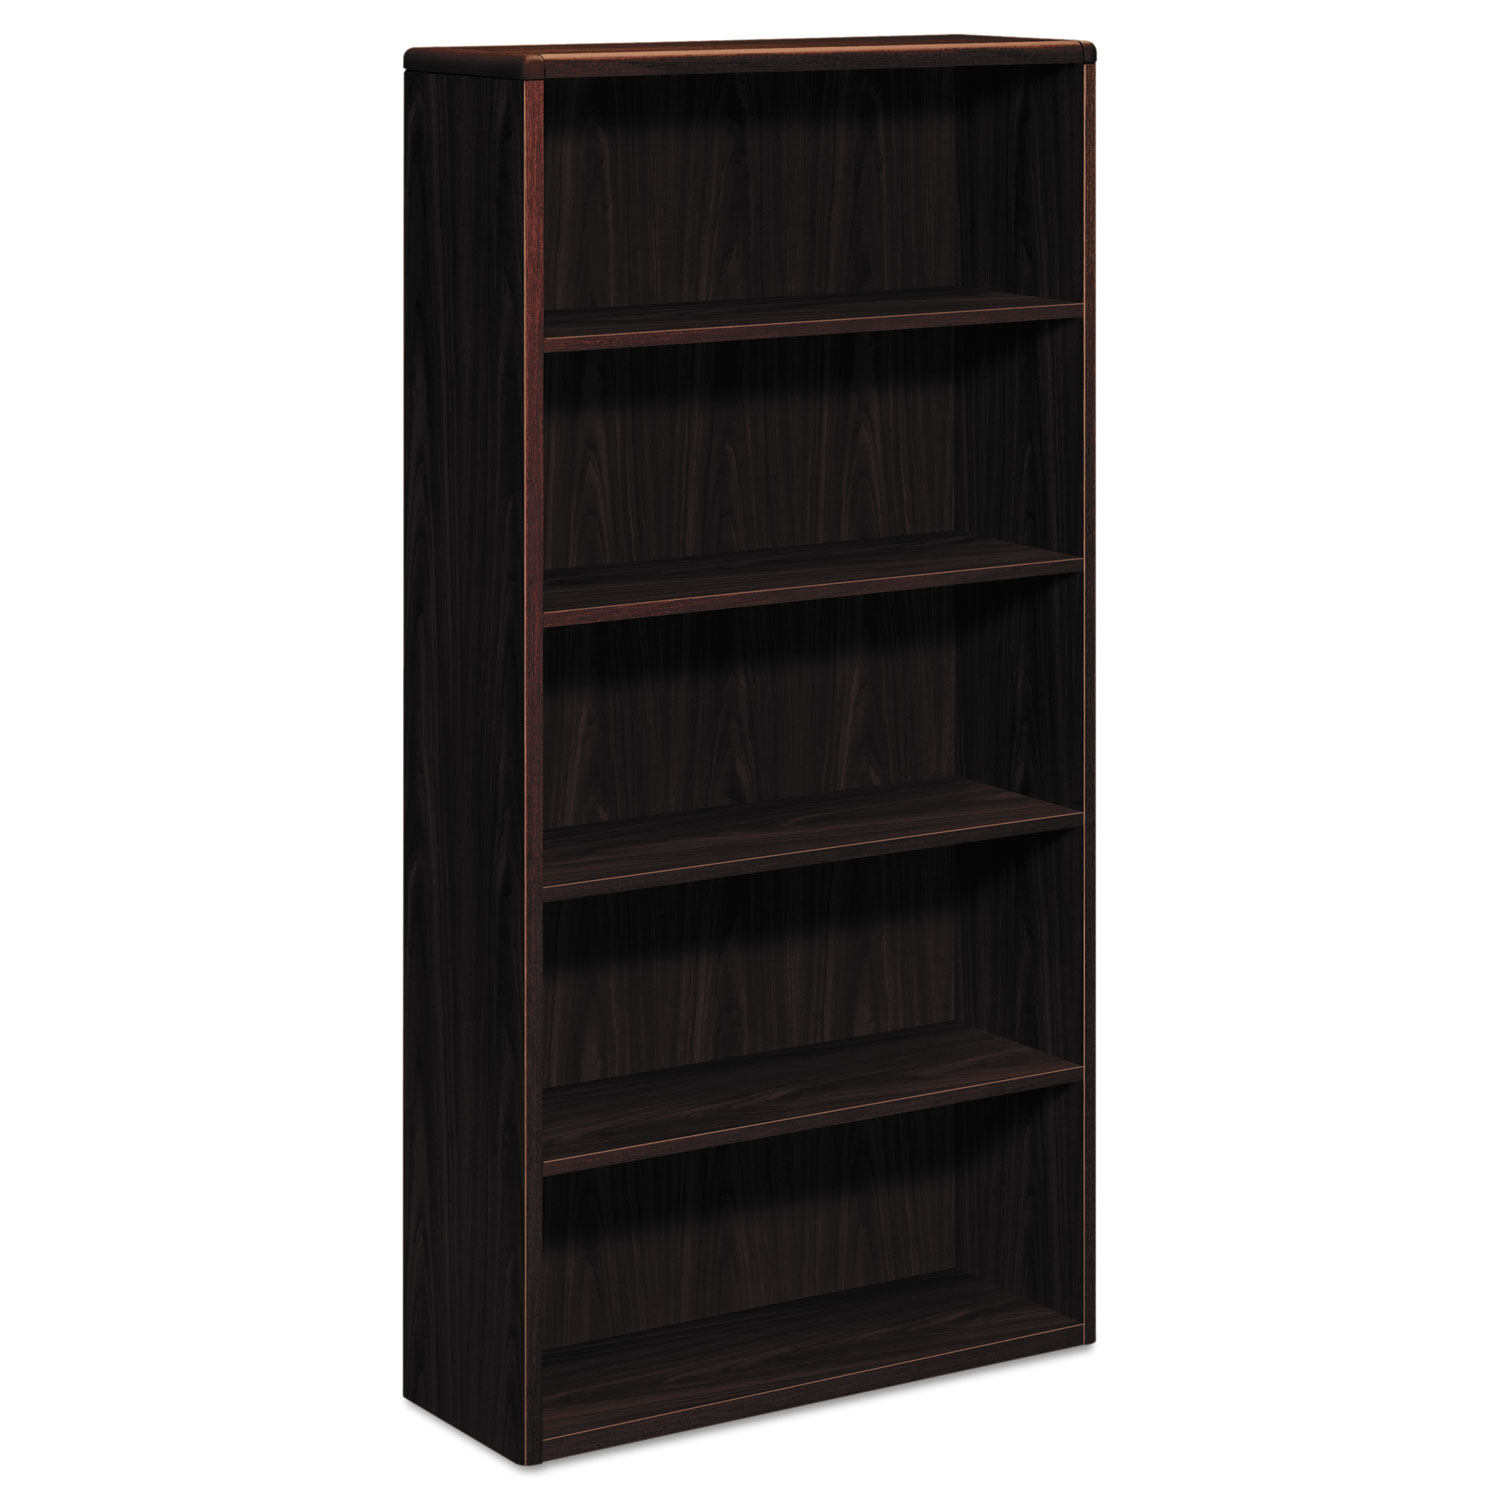 10700 Series Wood Bookcase, Five Shelf, 36w x 13 1/8d x 71h, Mahogany